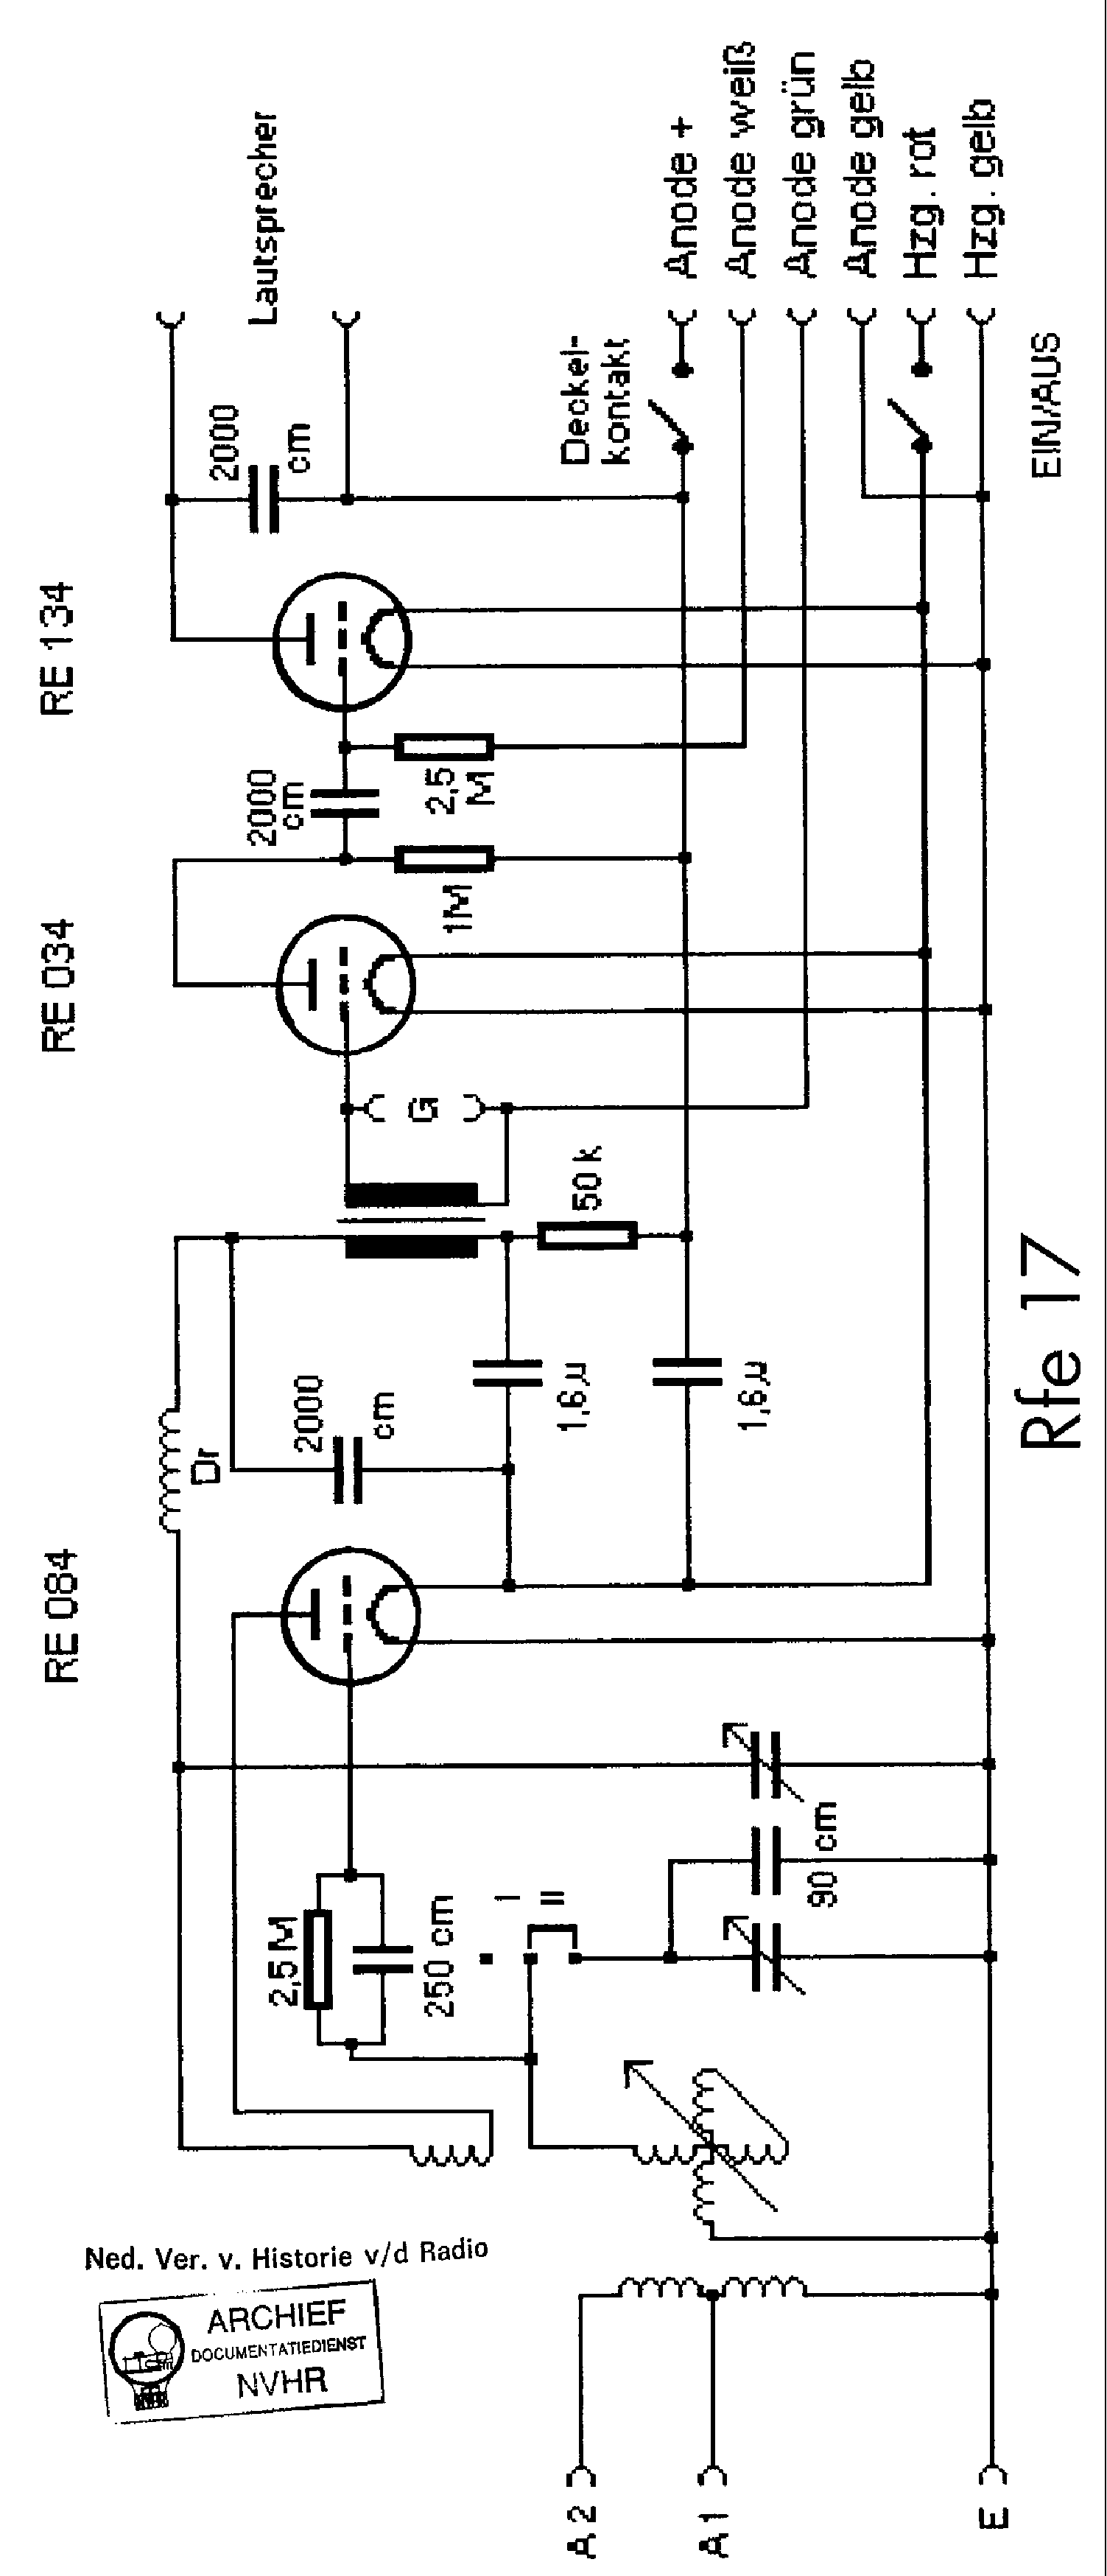 siemens-rfe17-battery-receiver-1926-sch-service-manual-download